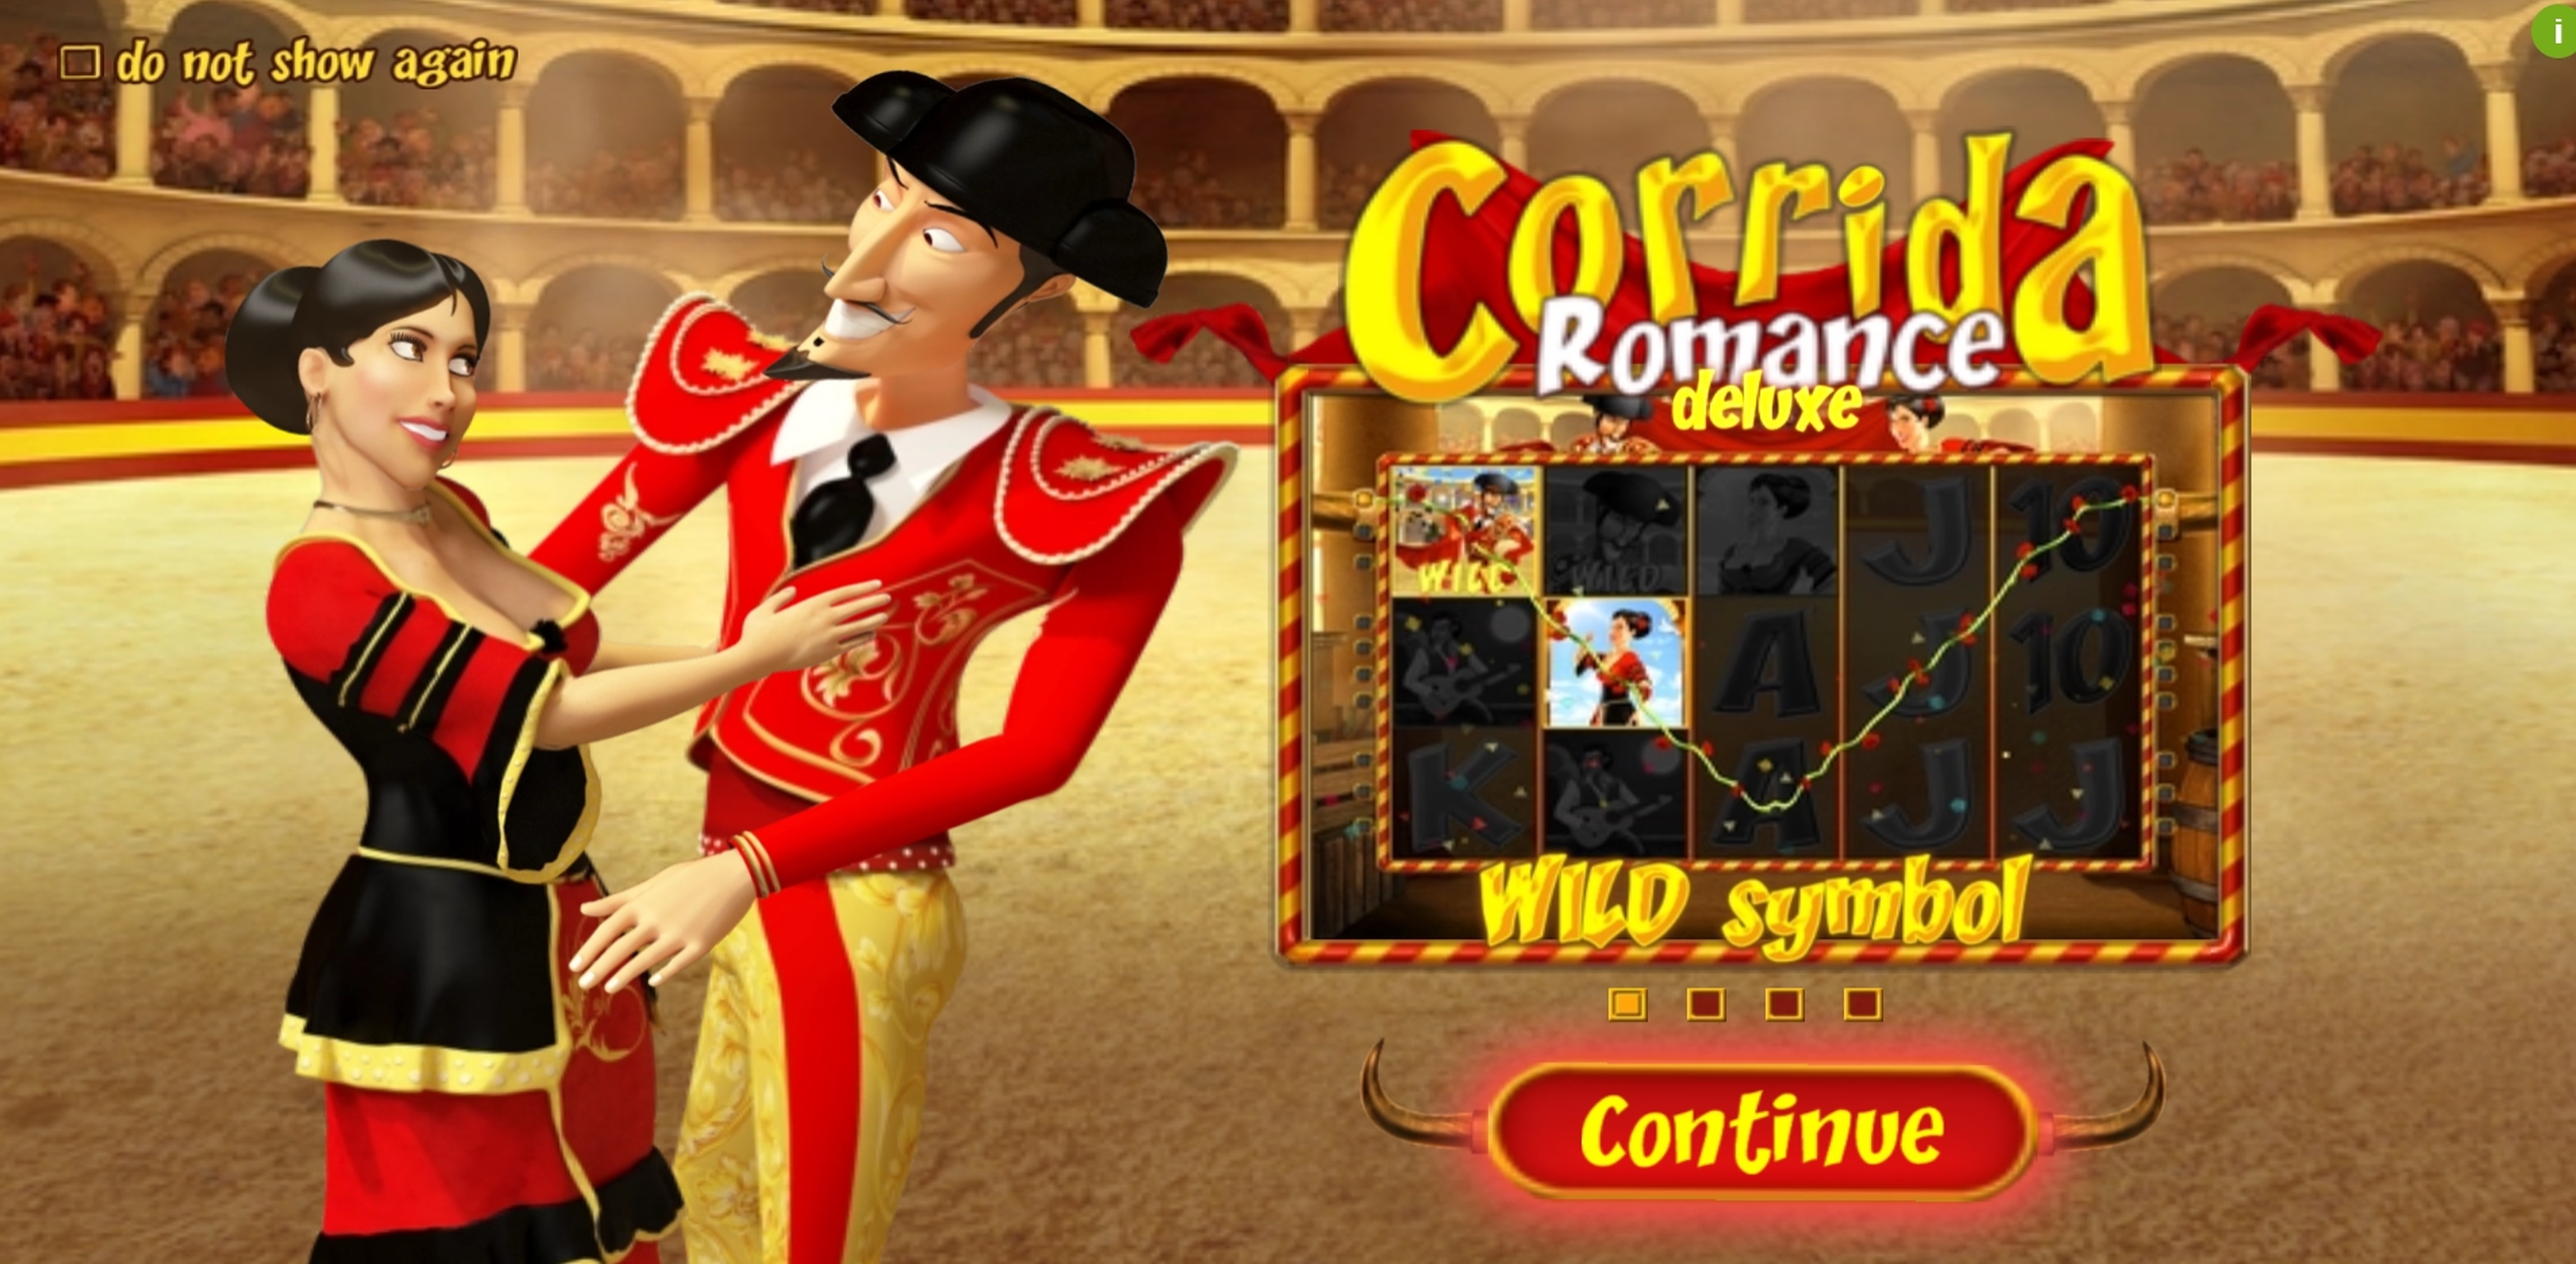 Play Corrida Romance Deluxe Free Casino Slot Game by Wazdan